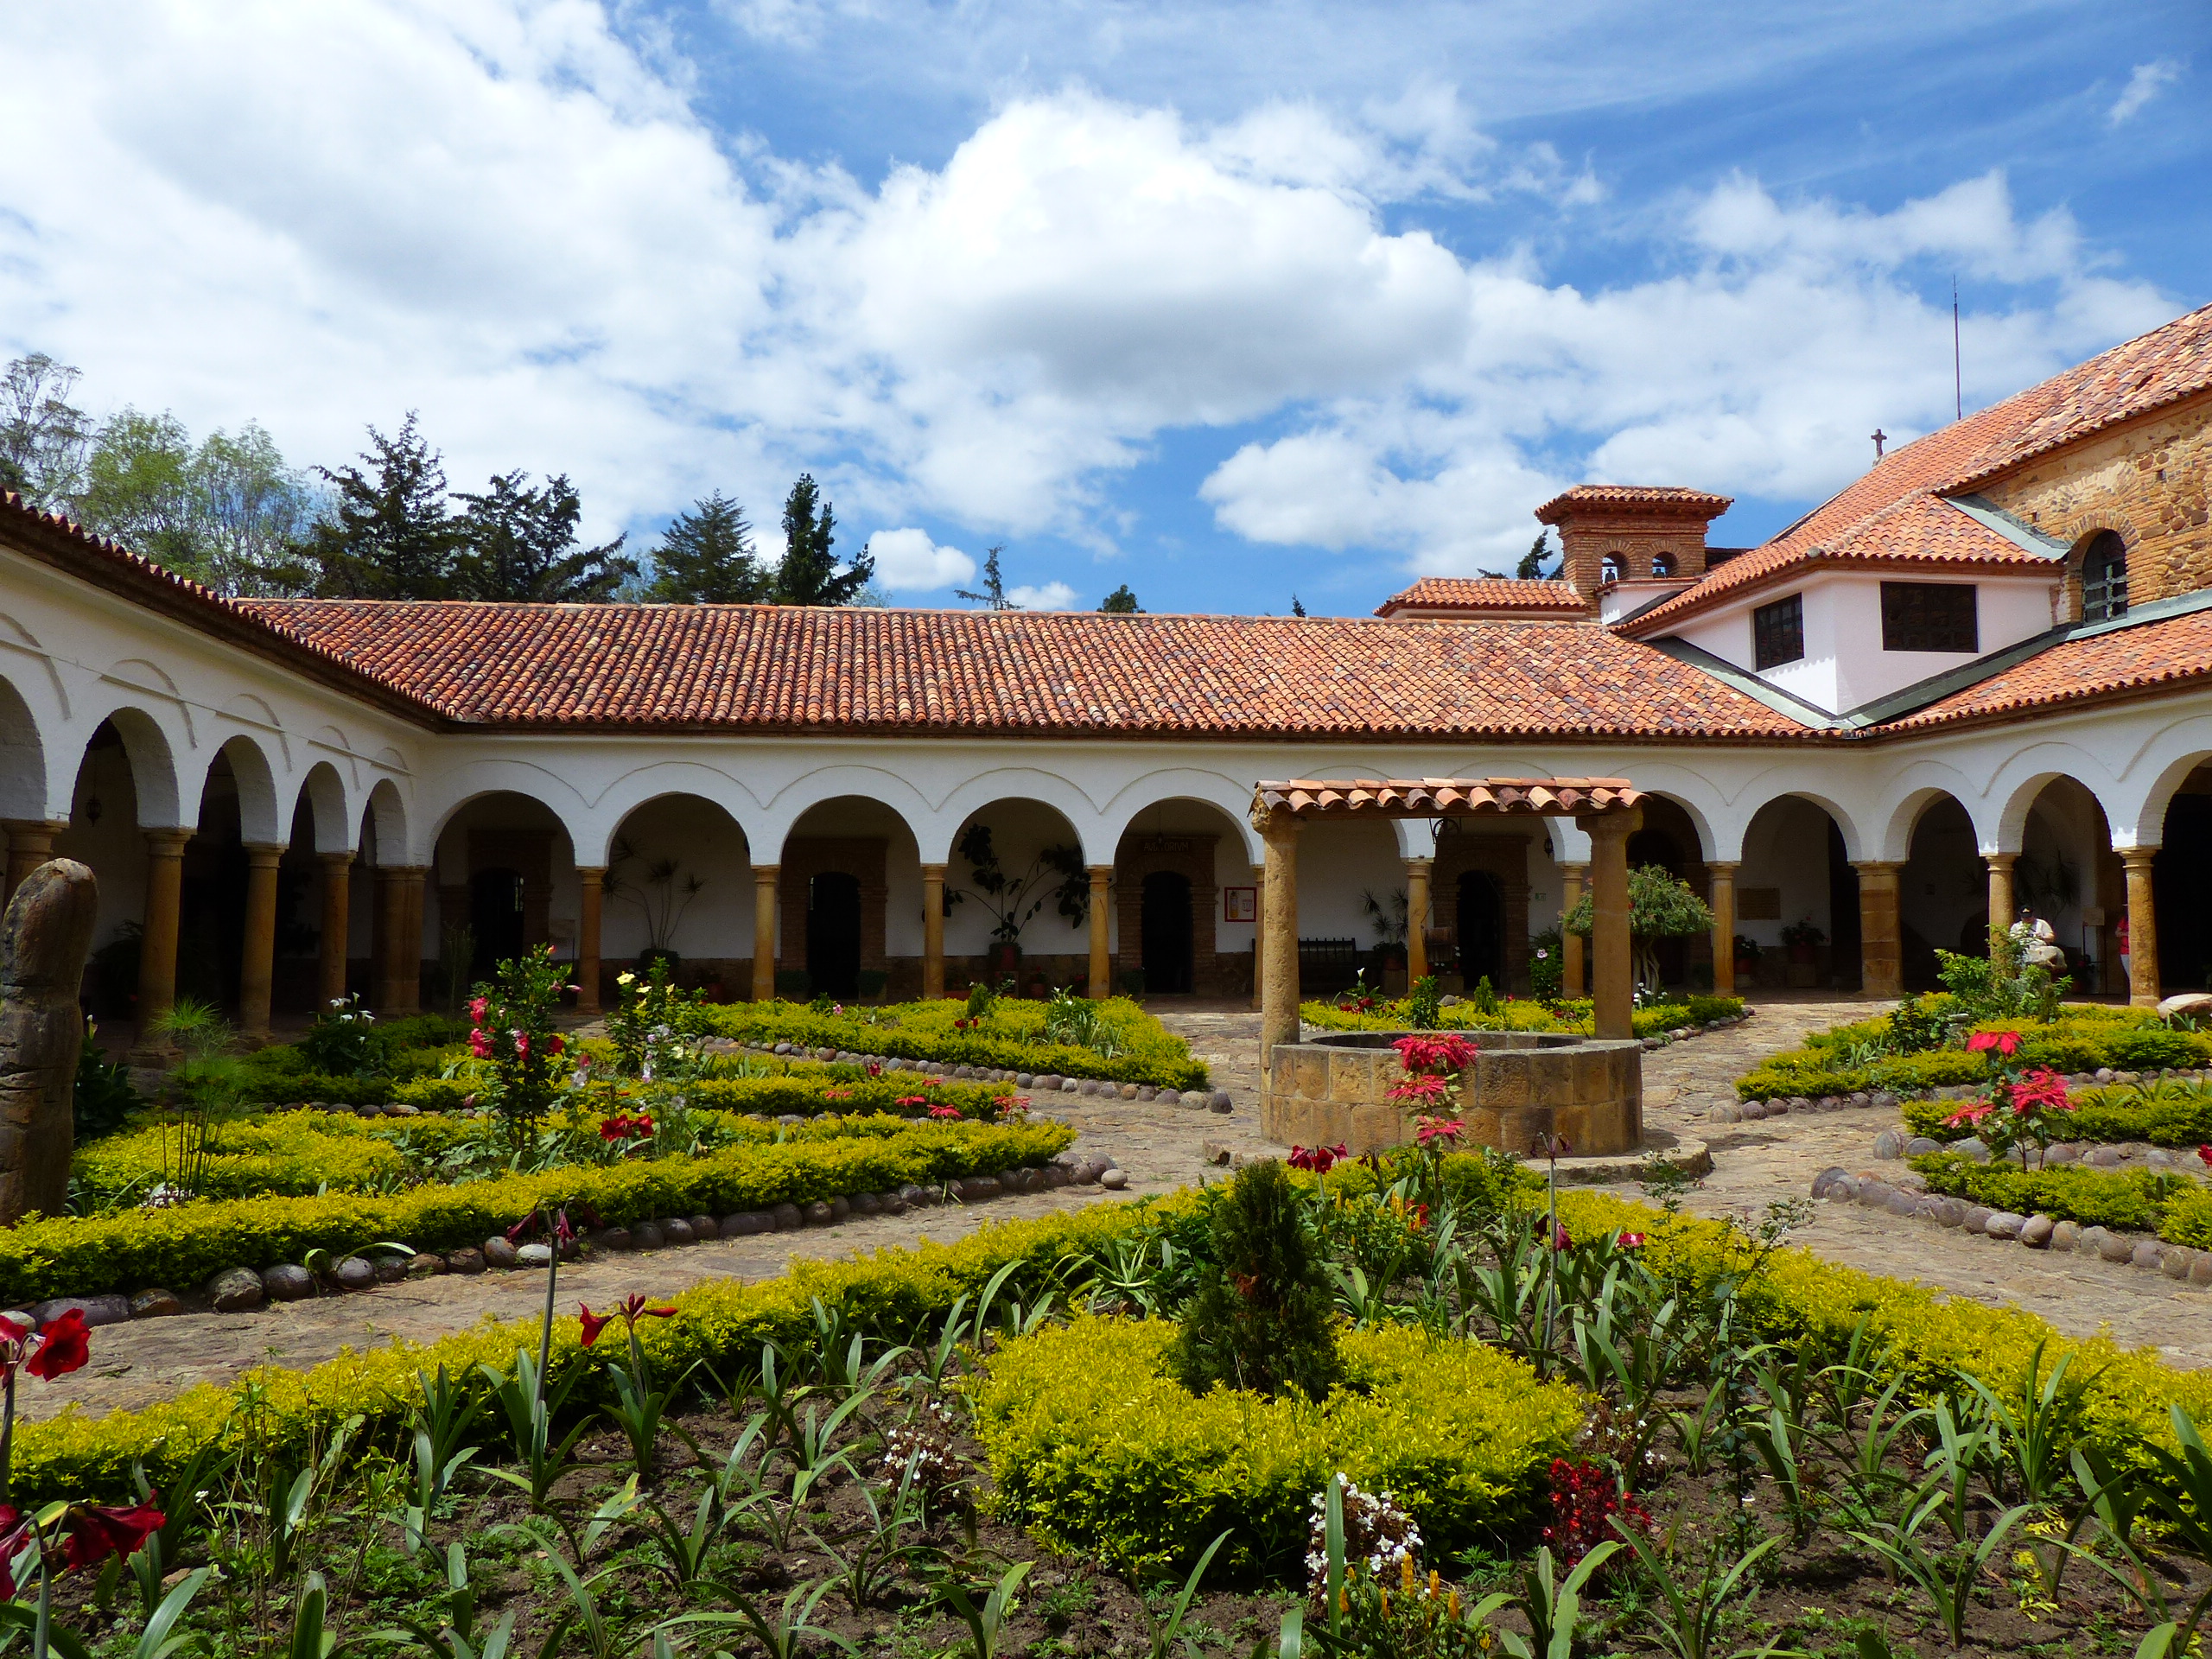 Villa de Leyva (village)